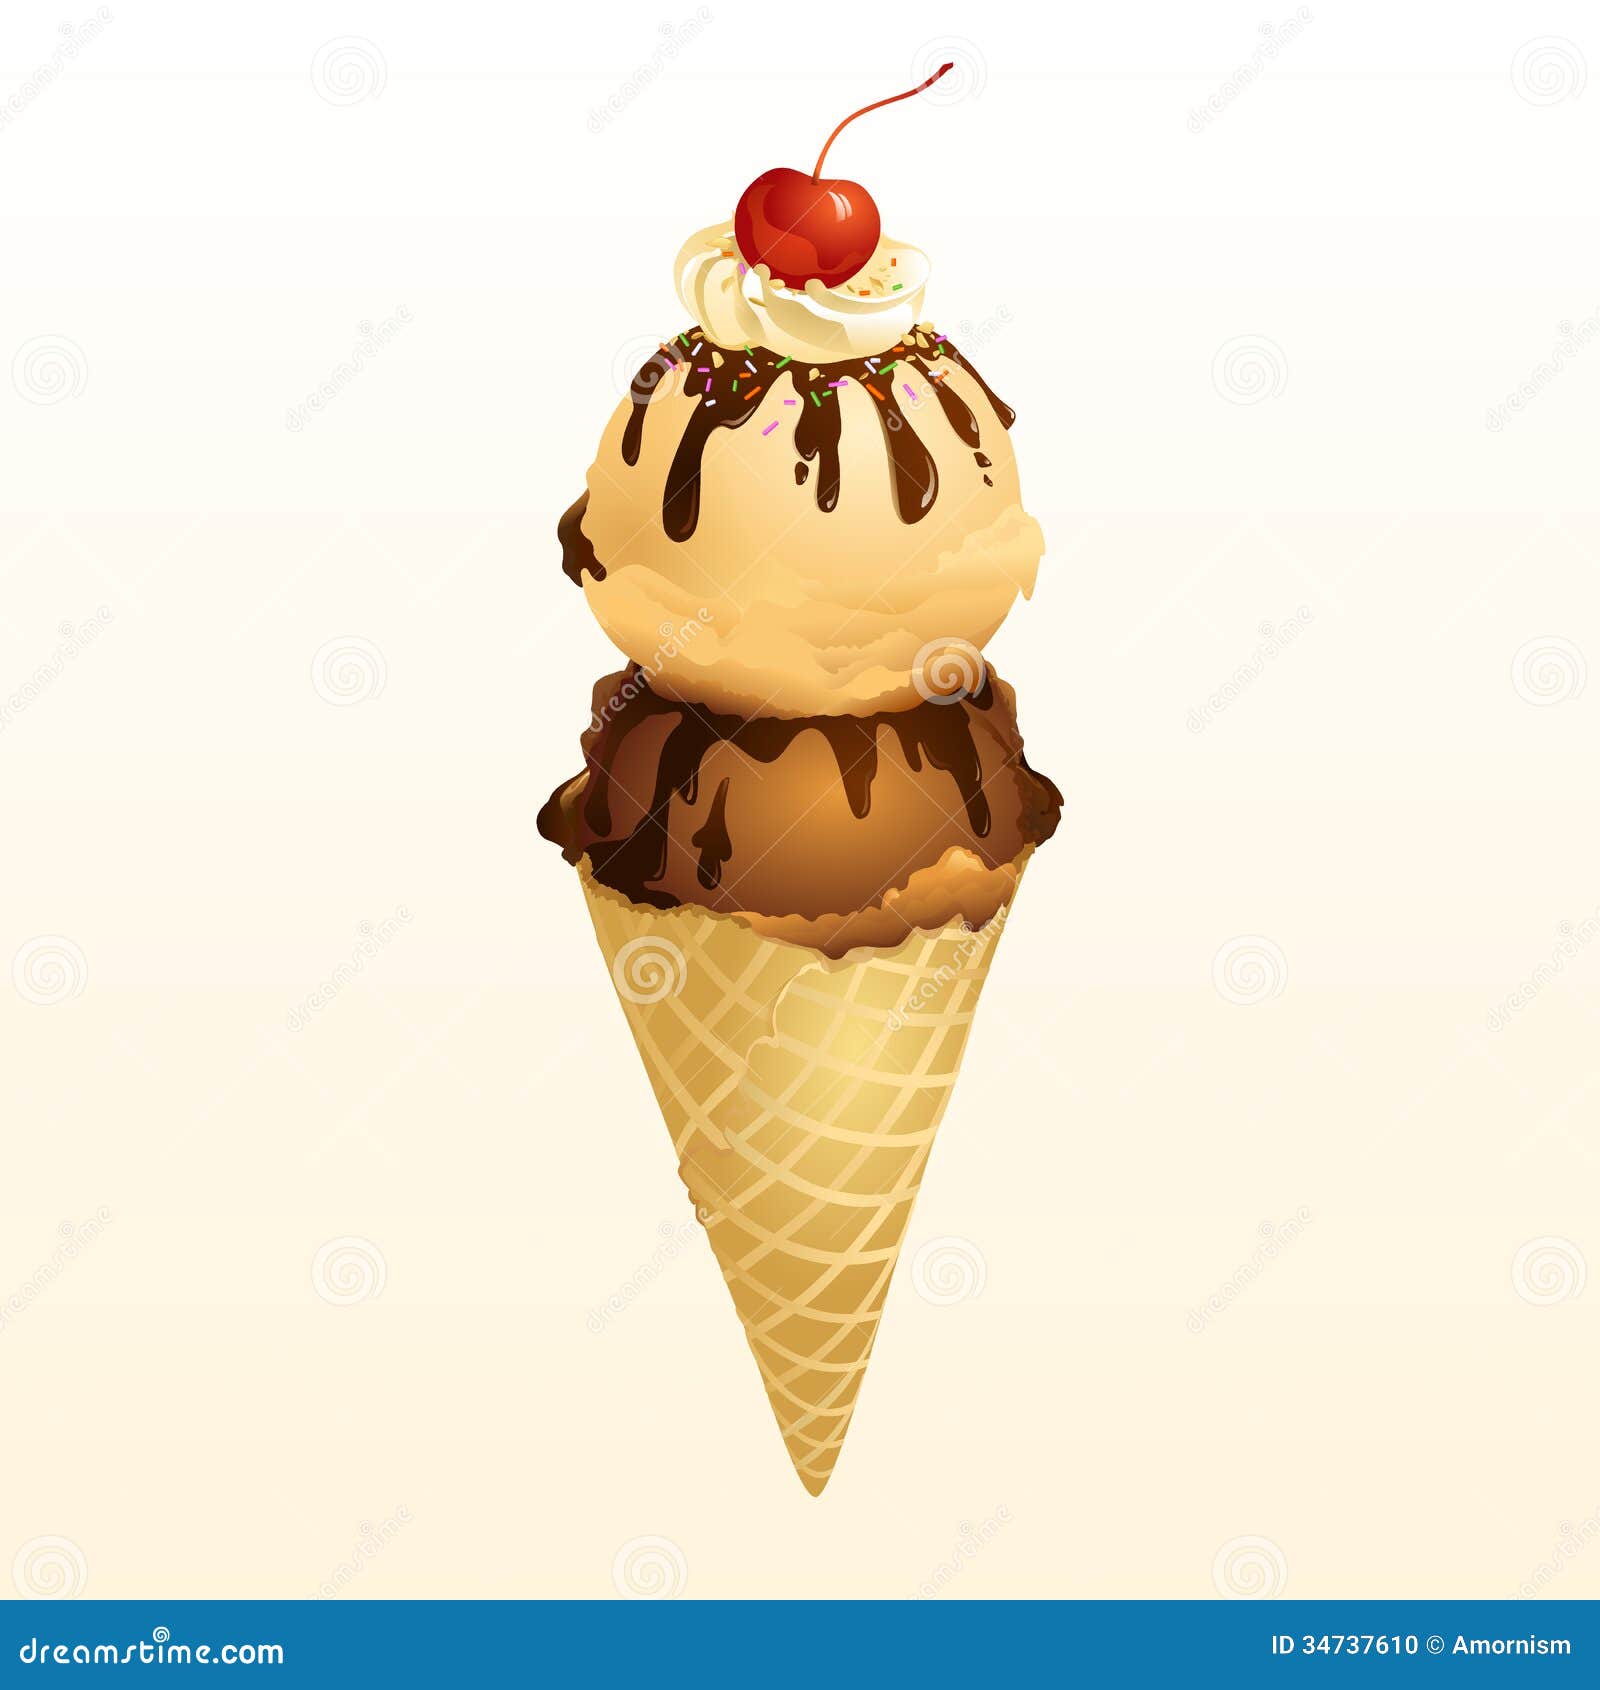 chocolate and vanilla ice cream cone